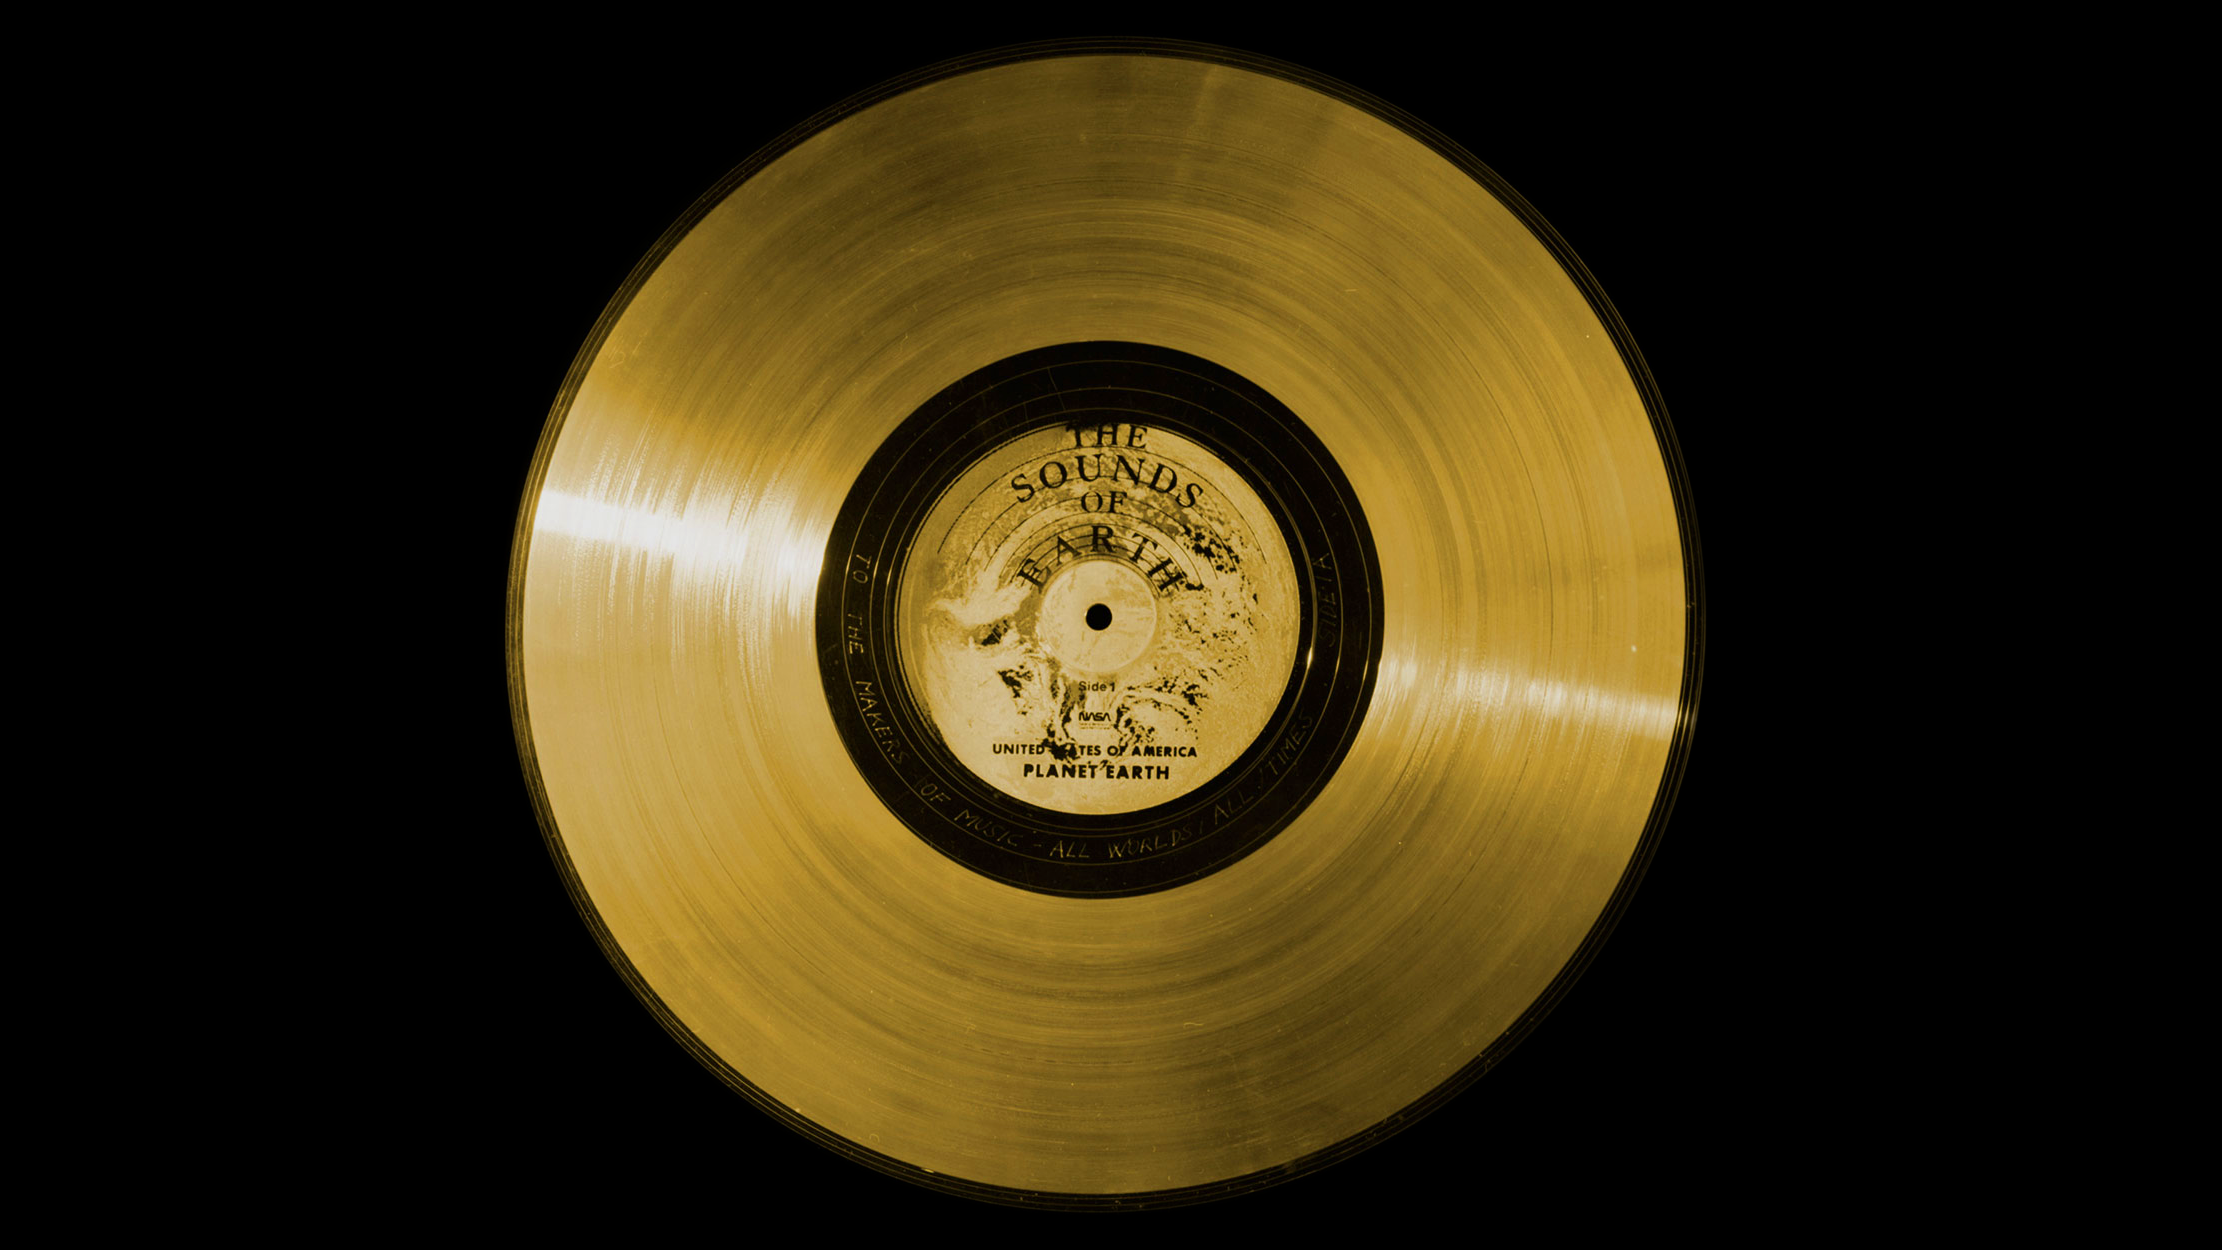 General 2222x1250 discs gold space Voyager Golden Record vinyl